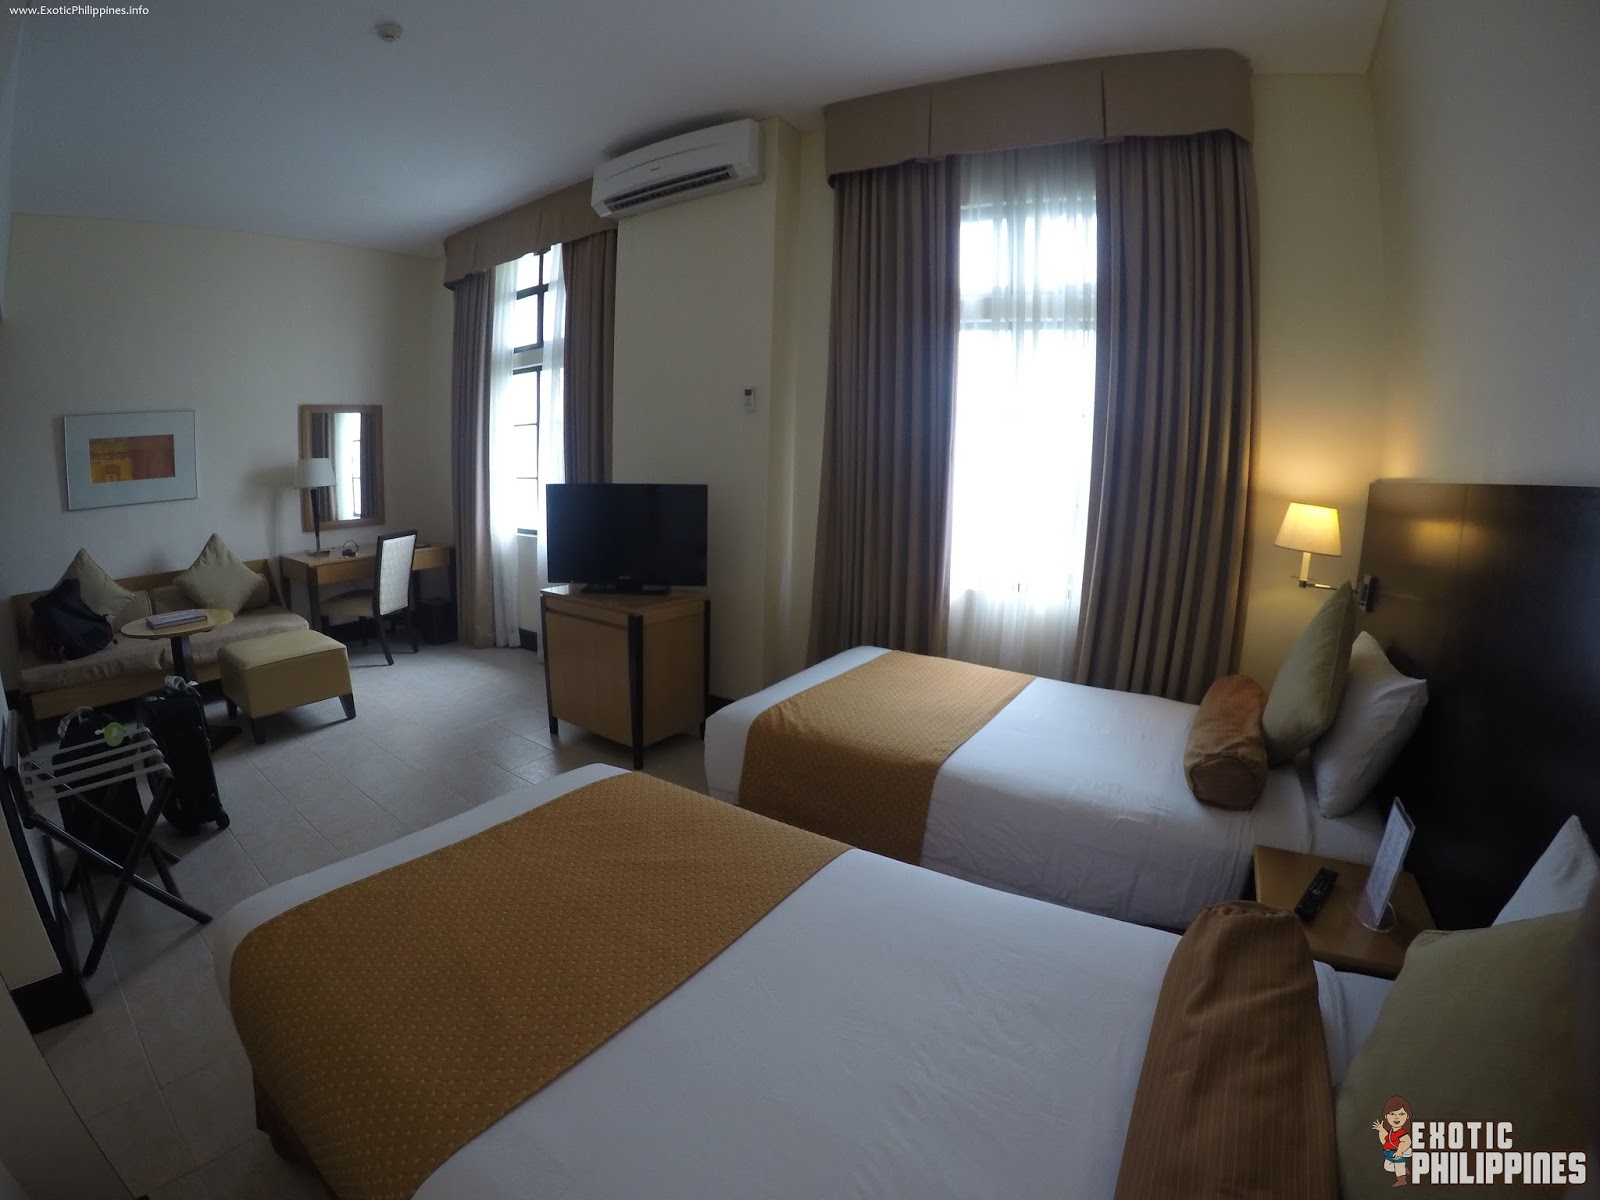 Ponte Fino Hotel Batangas City Hotel Review Exotic Philippines Travel Blogger Blog Vlogger Vlog